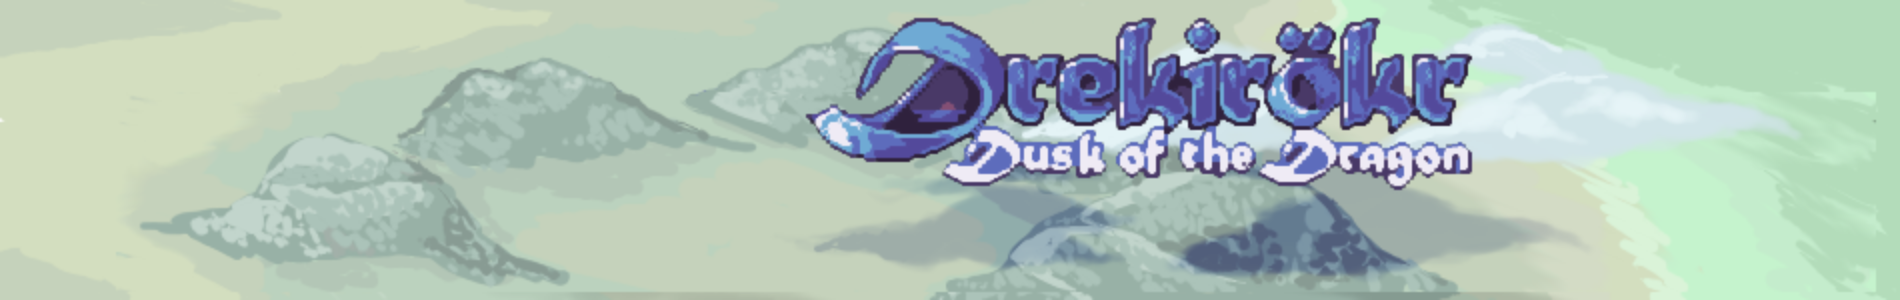 free instals Drekirokr - Dusk of the Dragon